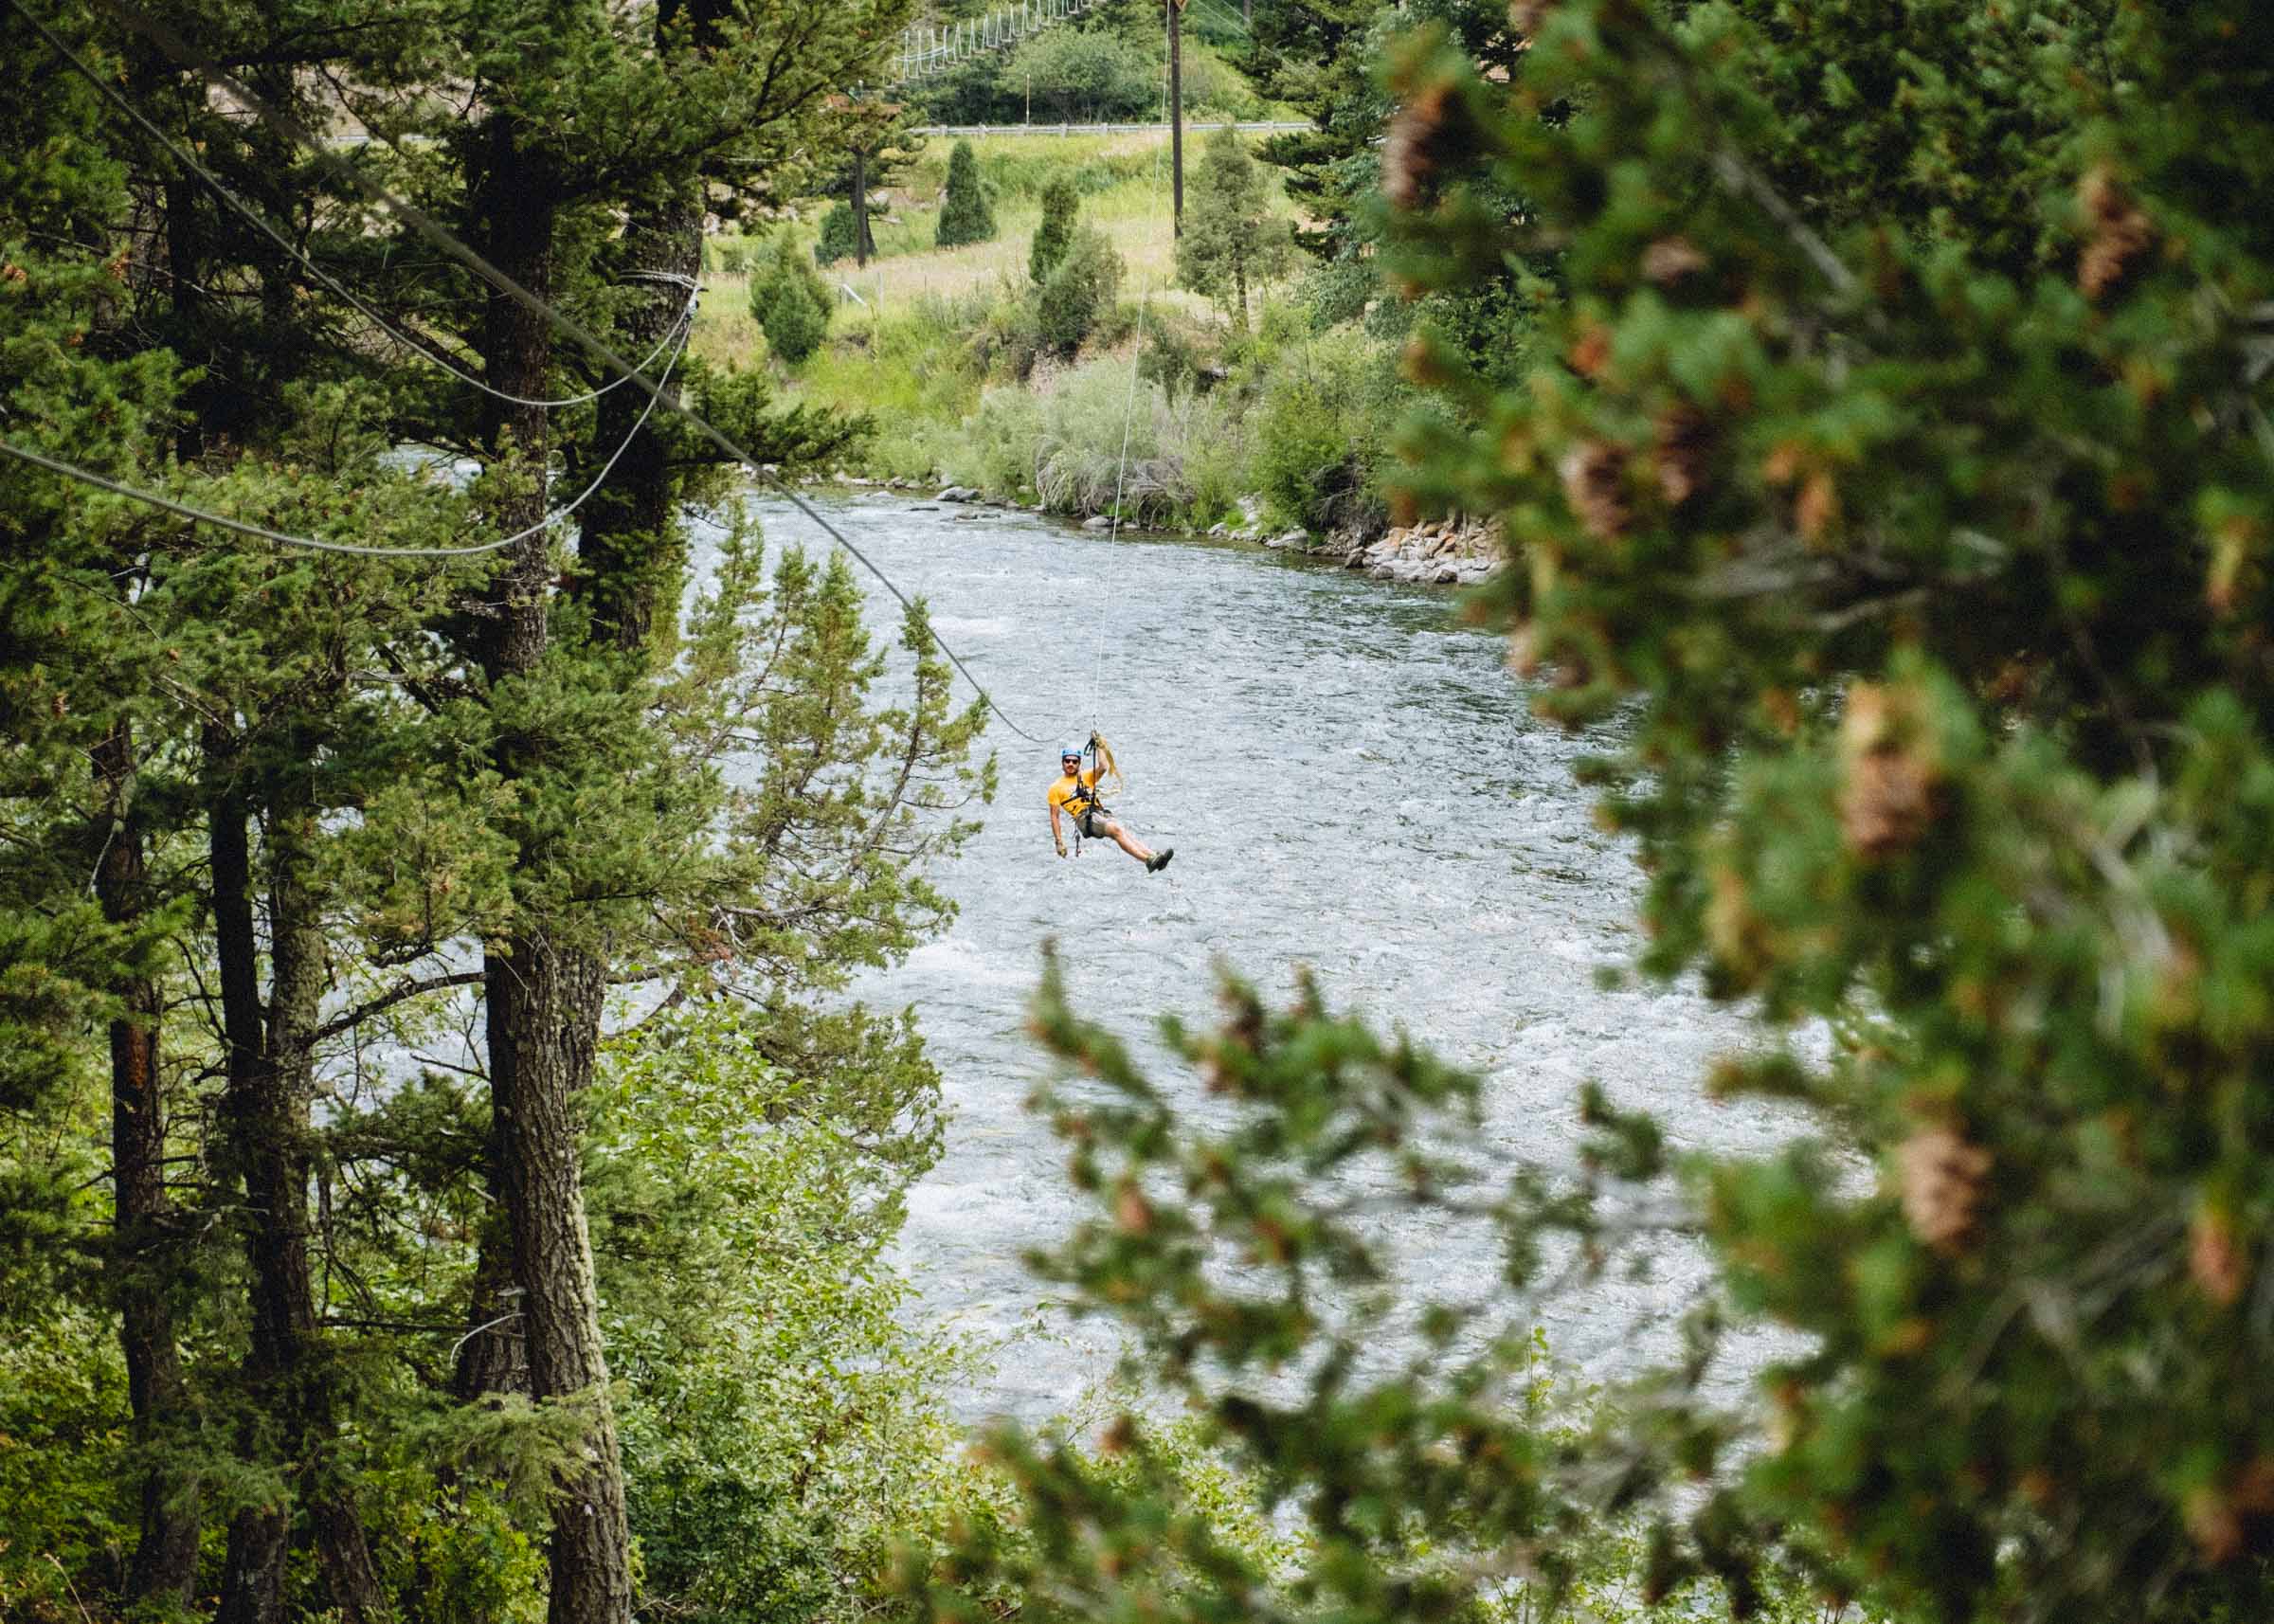 Ziplining across the Gallatin River